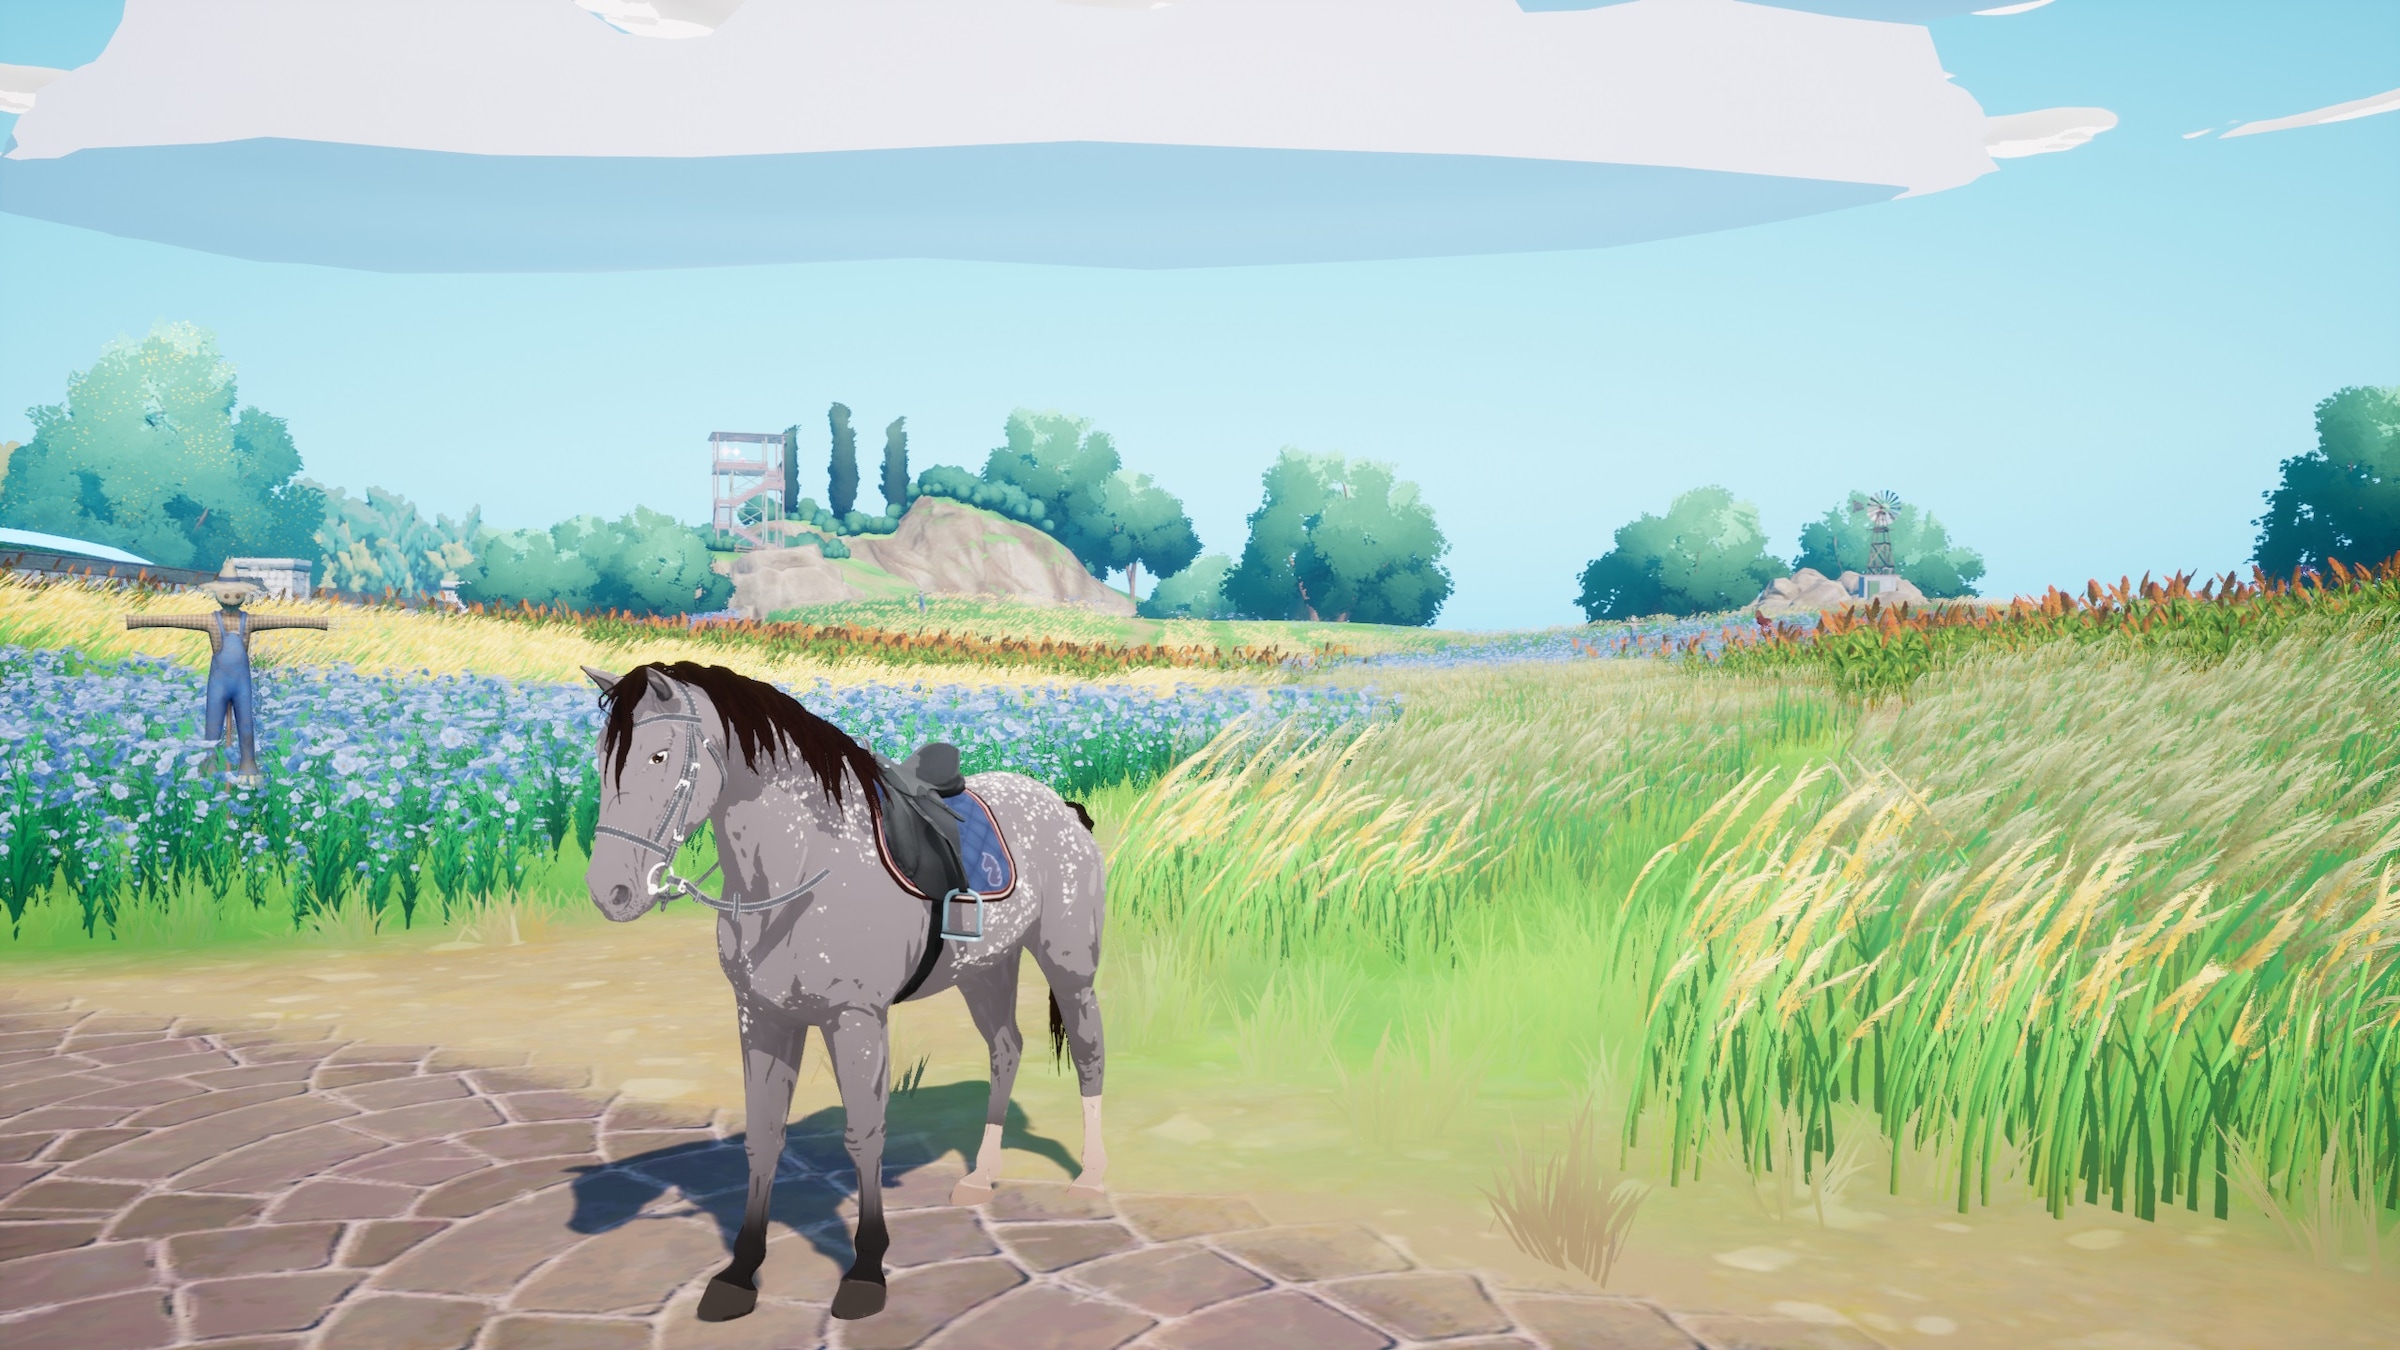 Astragon Spielesoftware »Horse Tales: Rette Emerald Valley!«, Nintendo Switch